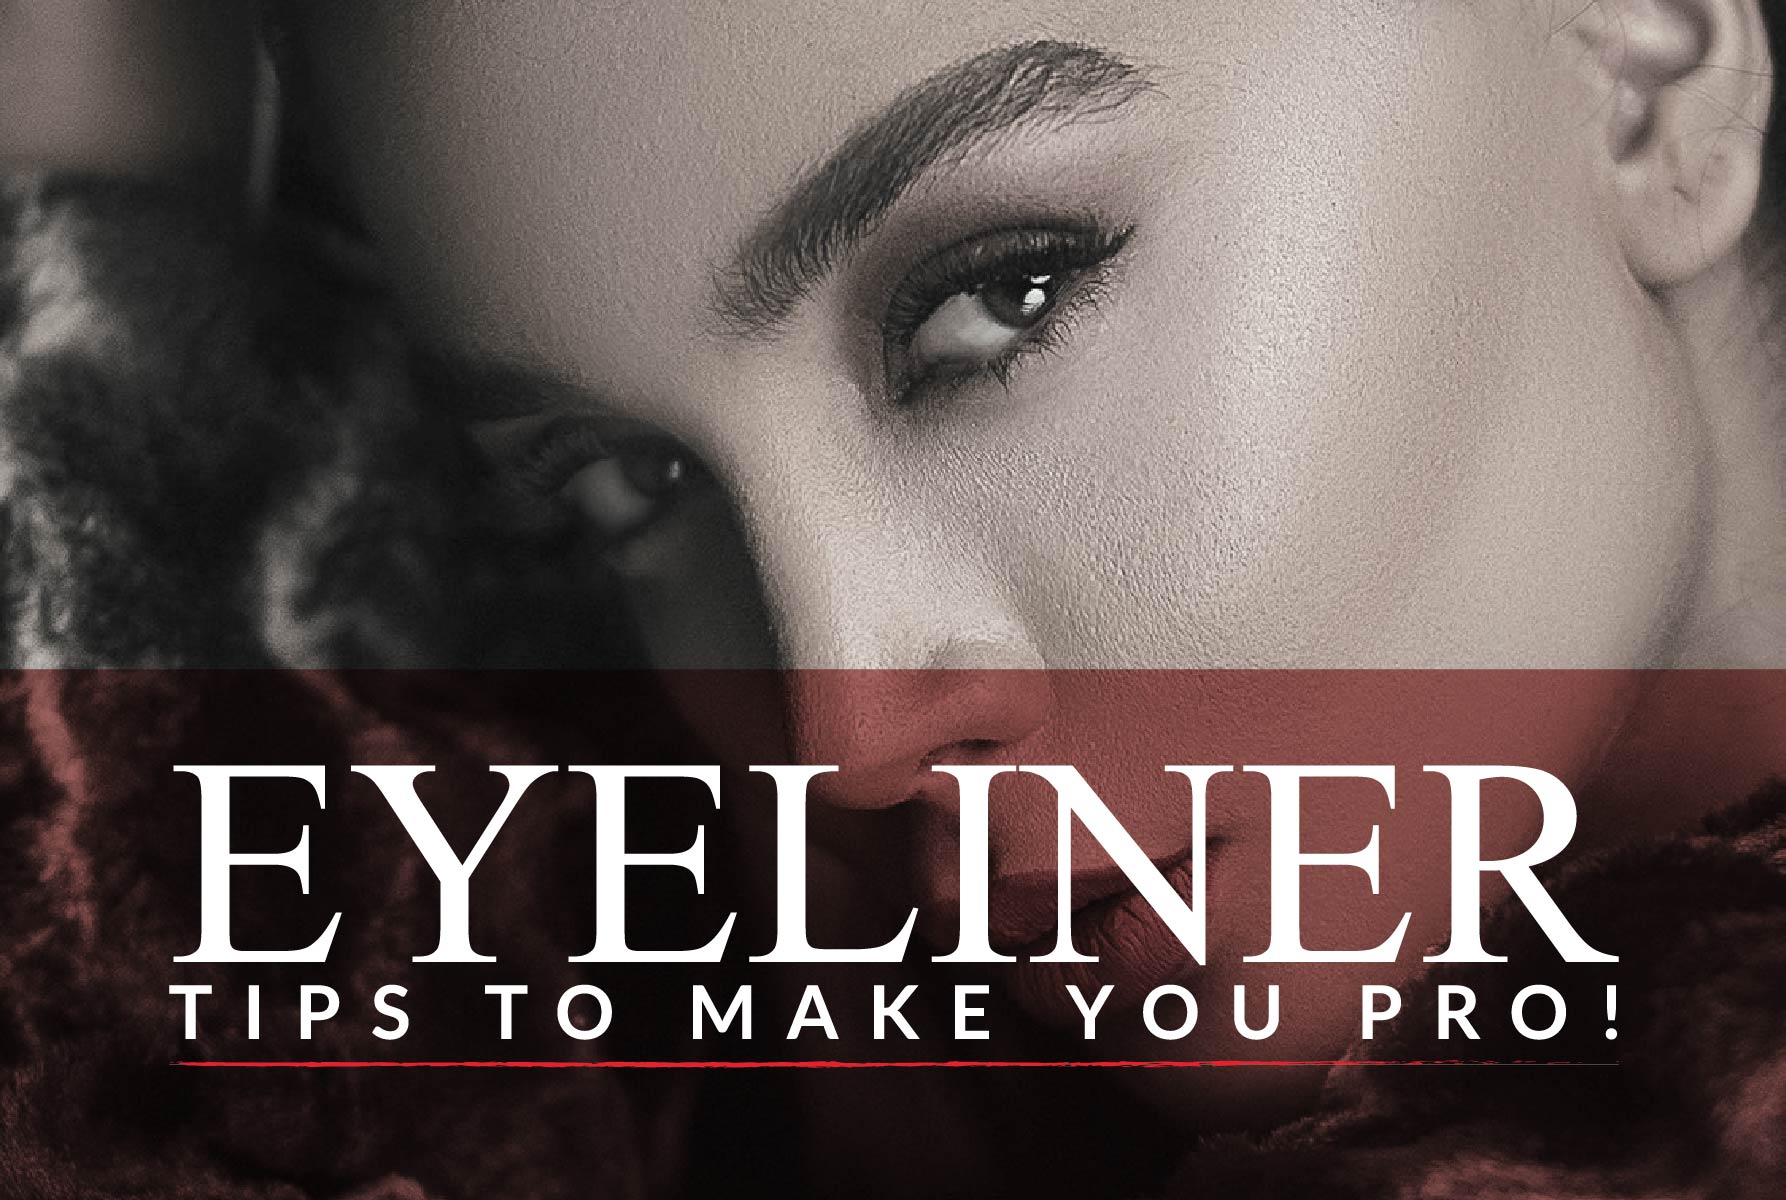 Eyeliner tips to make you pro!